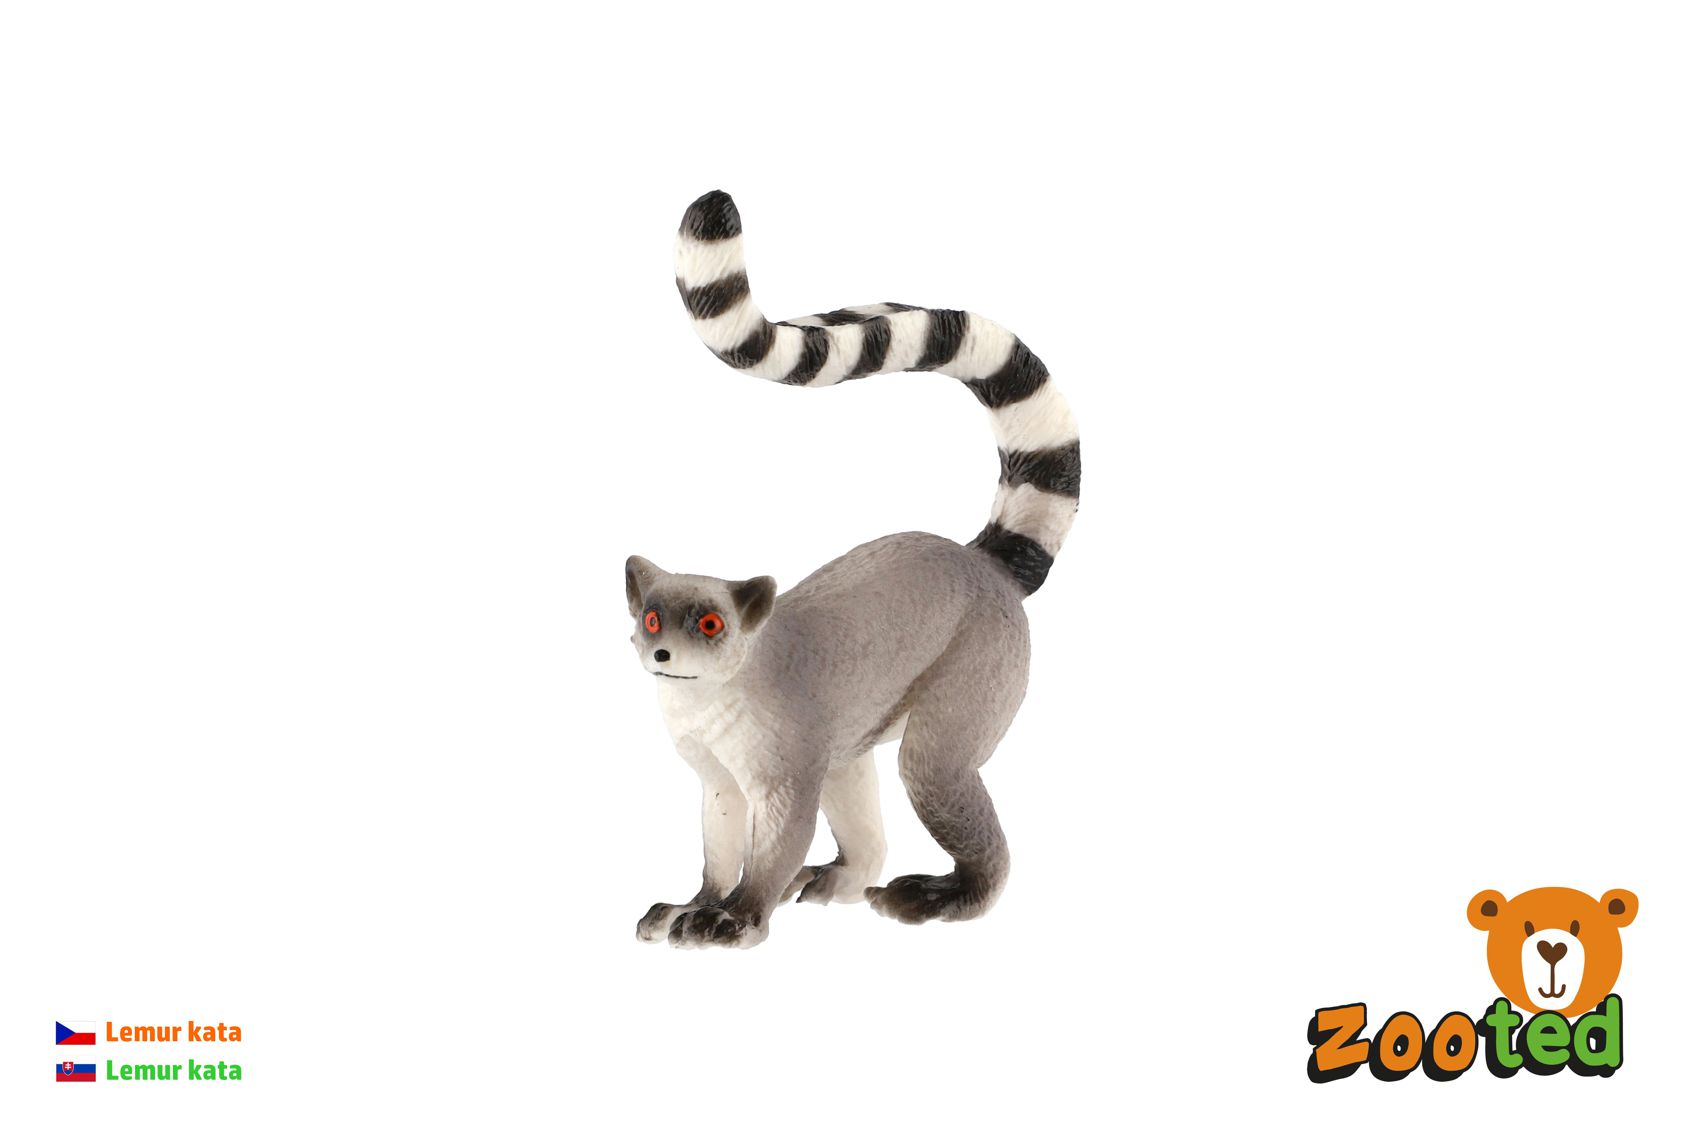 ZOOted Lemur kata zooted plast 7cm v sáčku